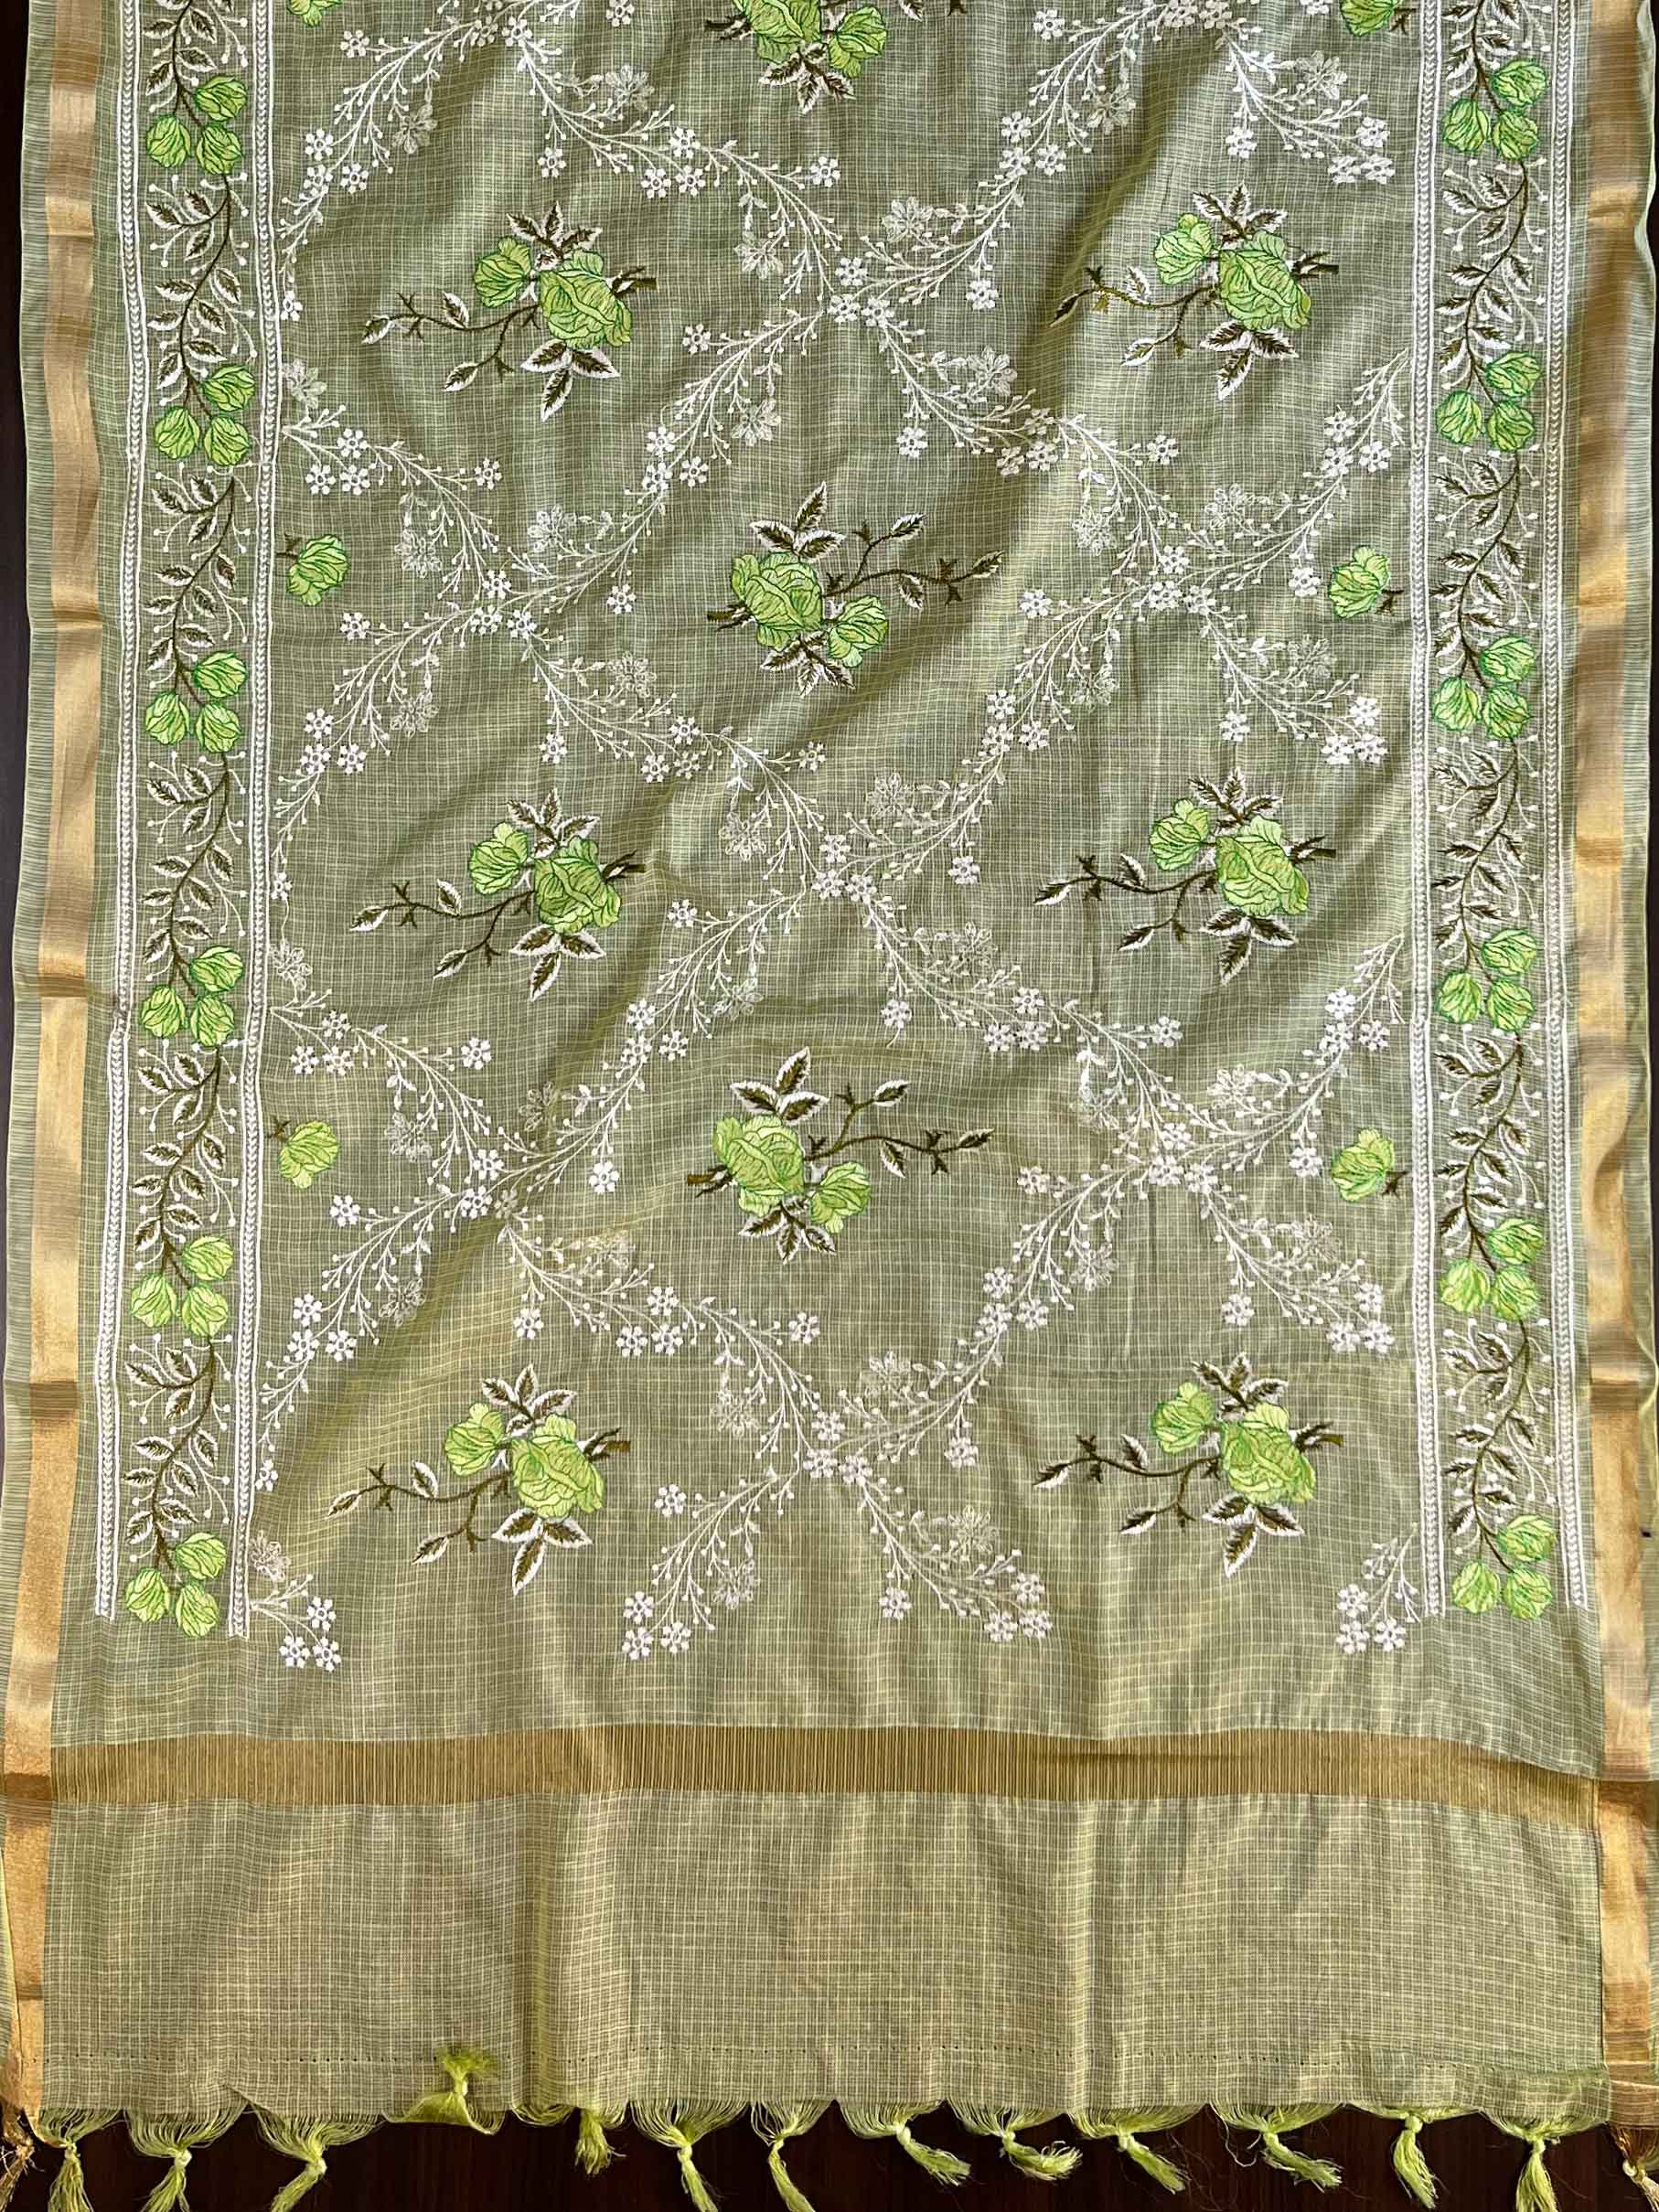 Banarasee Chanderi Cotton Salwar Kameez Fabric With Zari Work & Embroidered Dupatta-Green